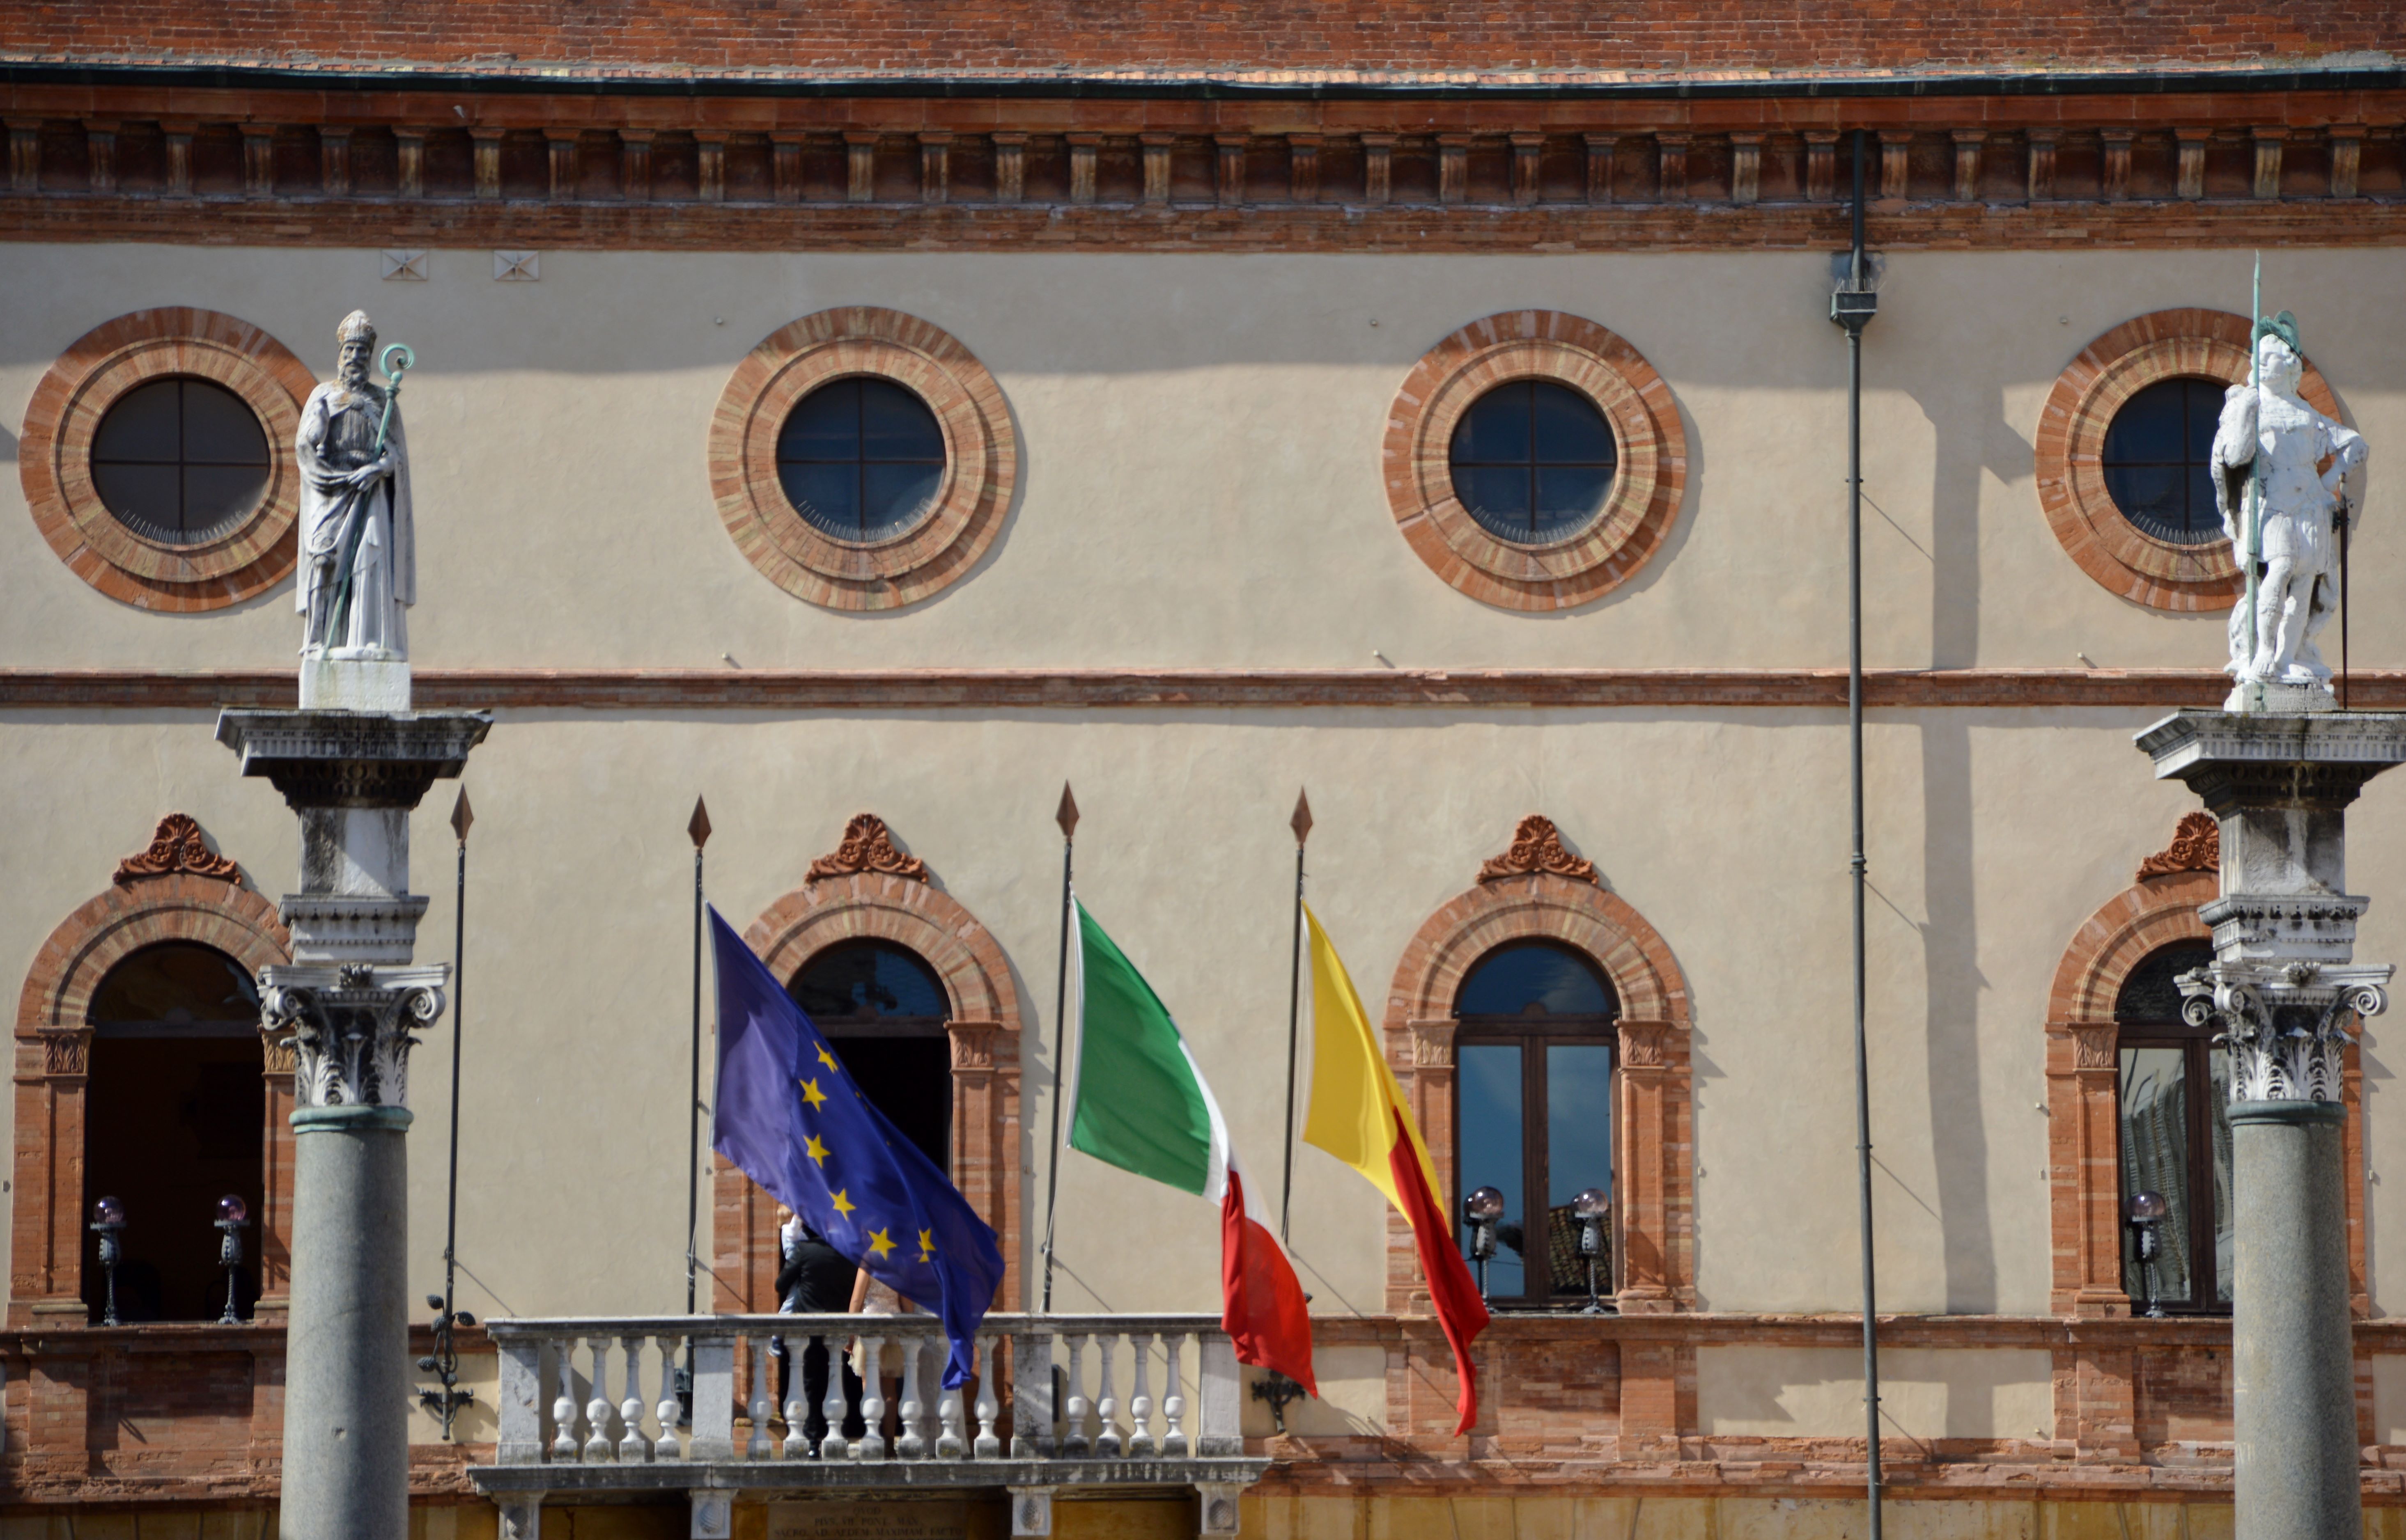 foto: https://upload.wikimedia.org/wikipedia/commons/7/7c/Palazzo_comunale_panoramica_01.JPG